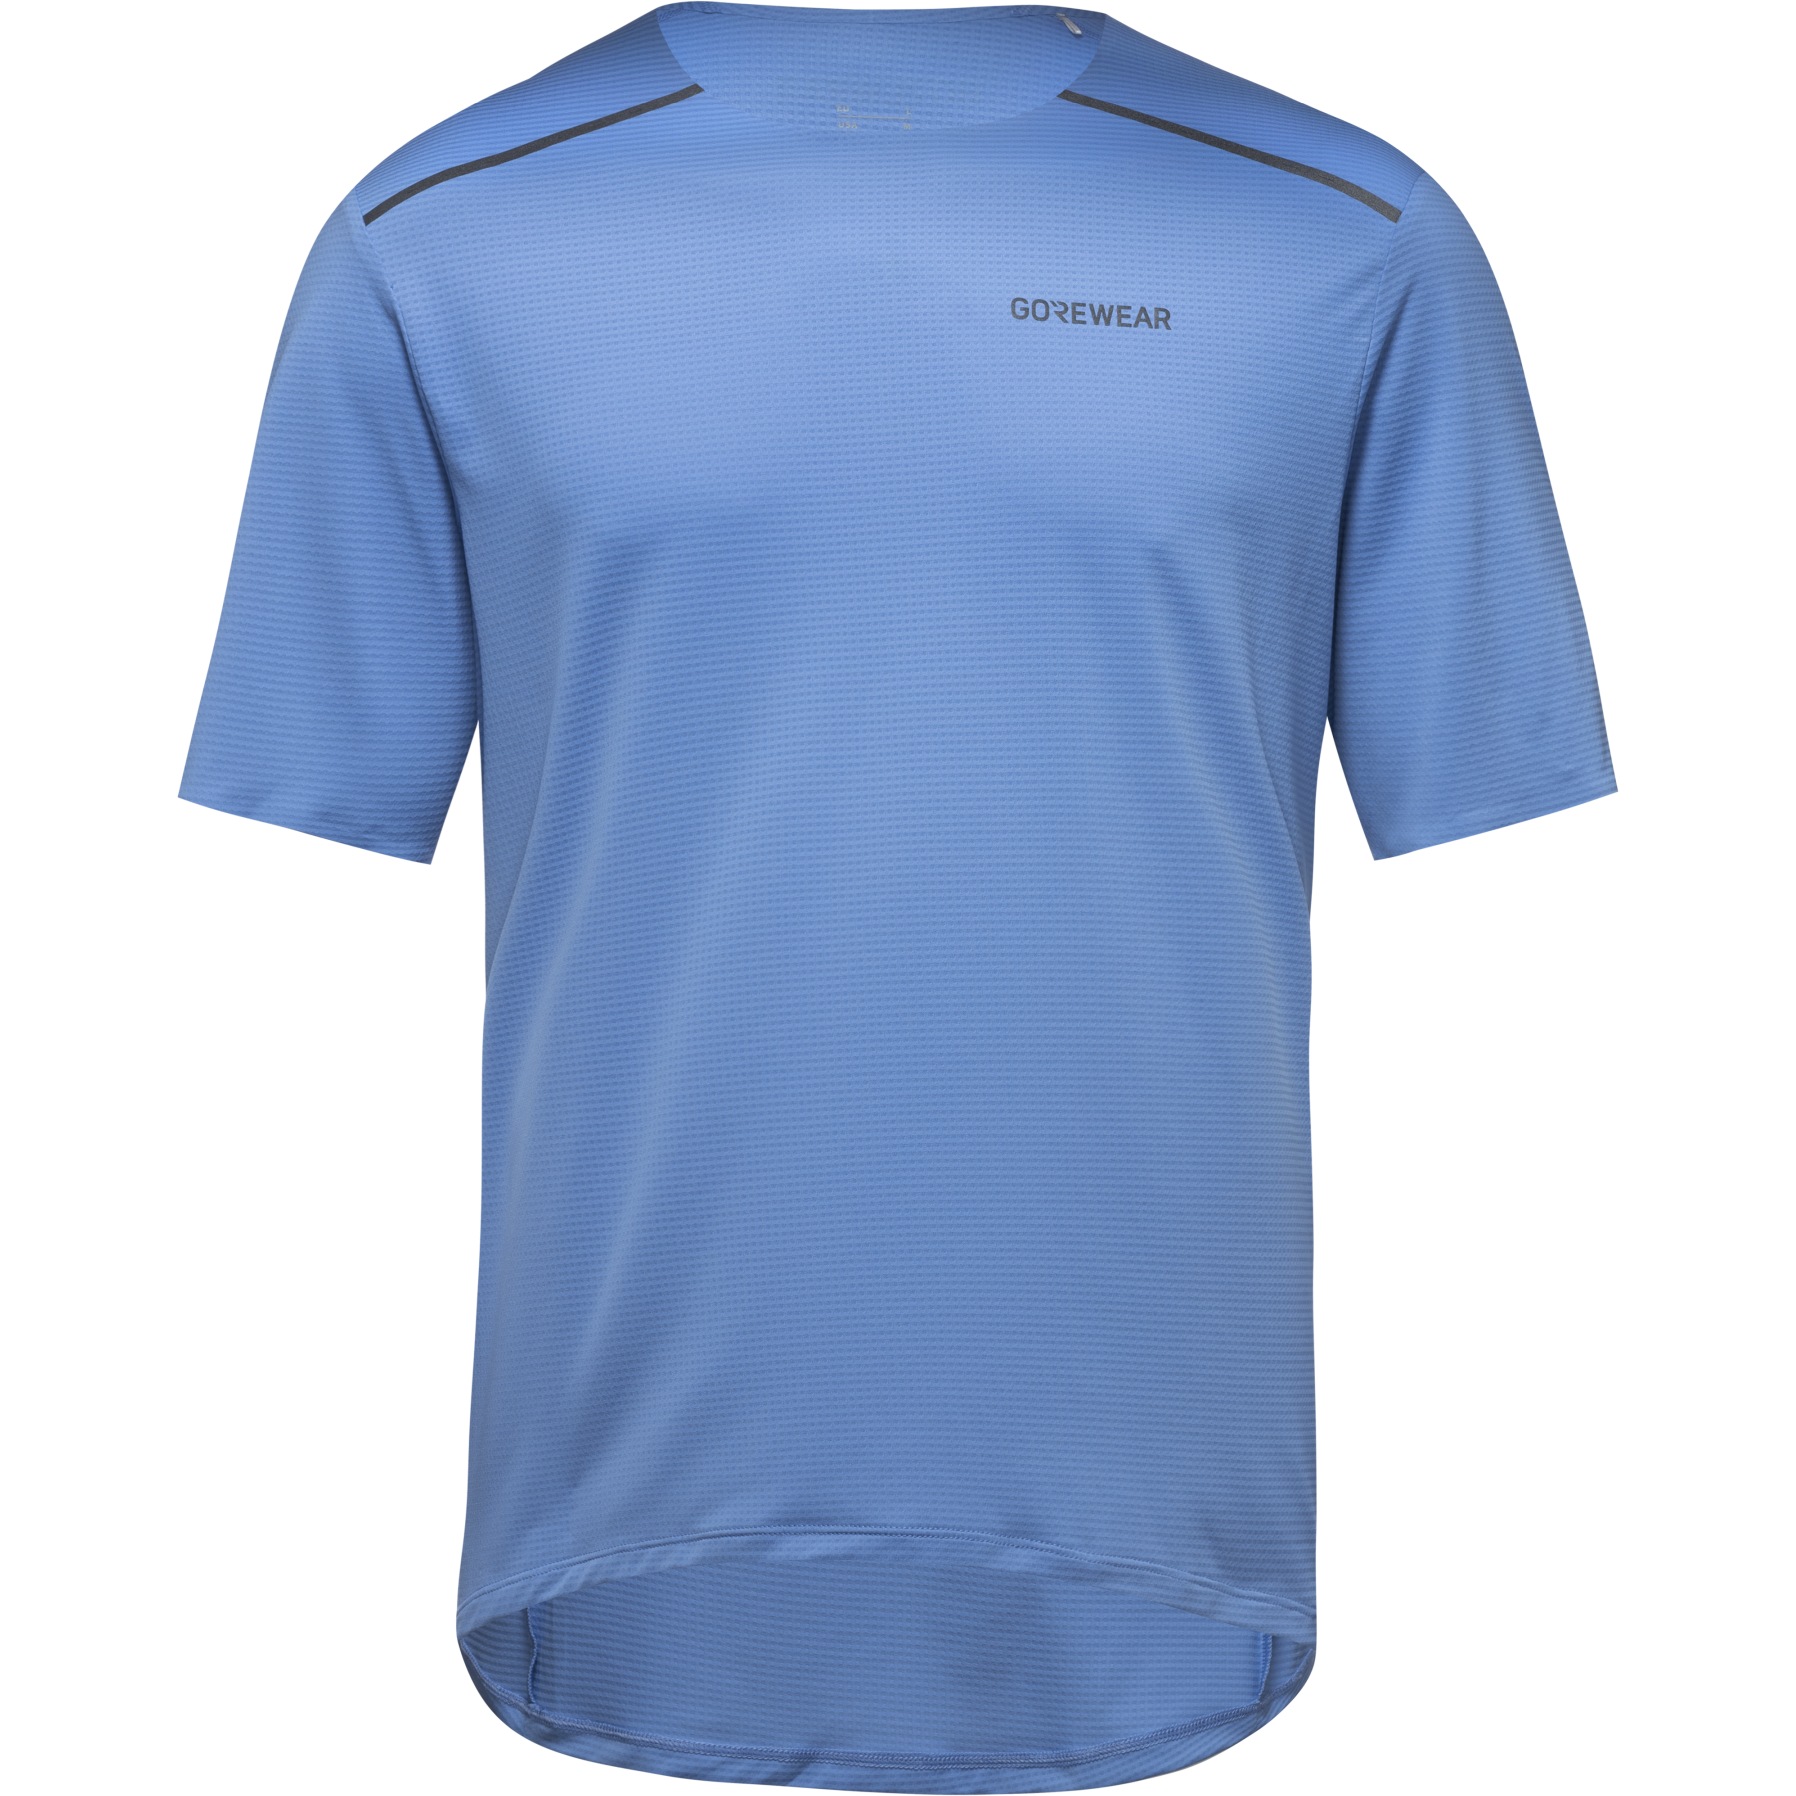 Productfoto van GOREWEAR Contest 2.0 T-Shirt Heren - scrub blue BV00